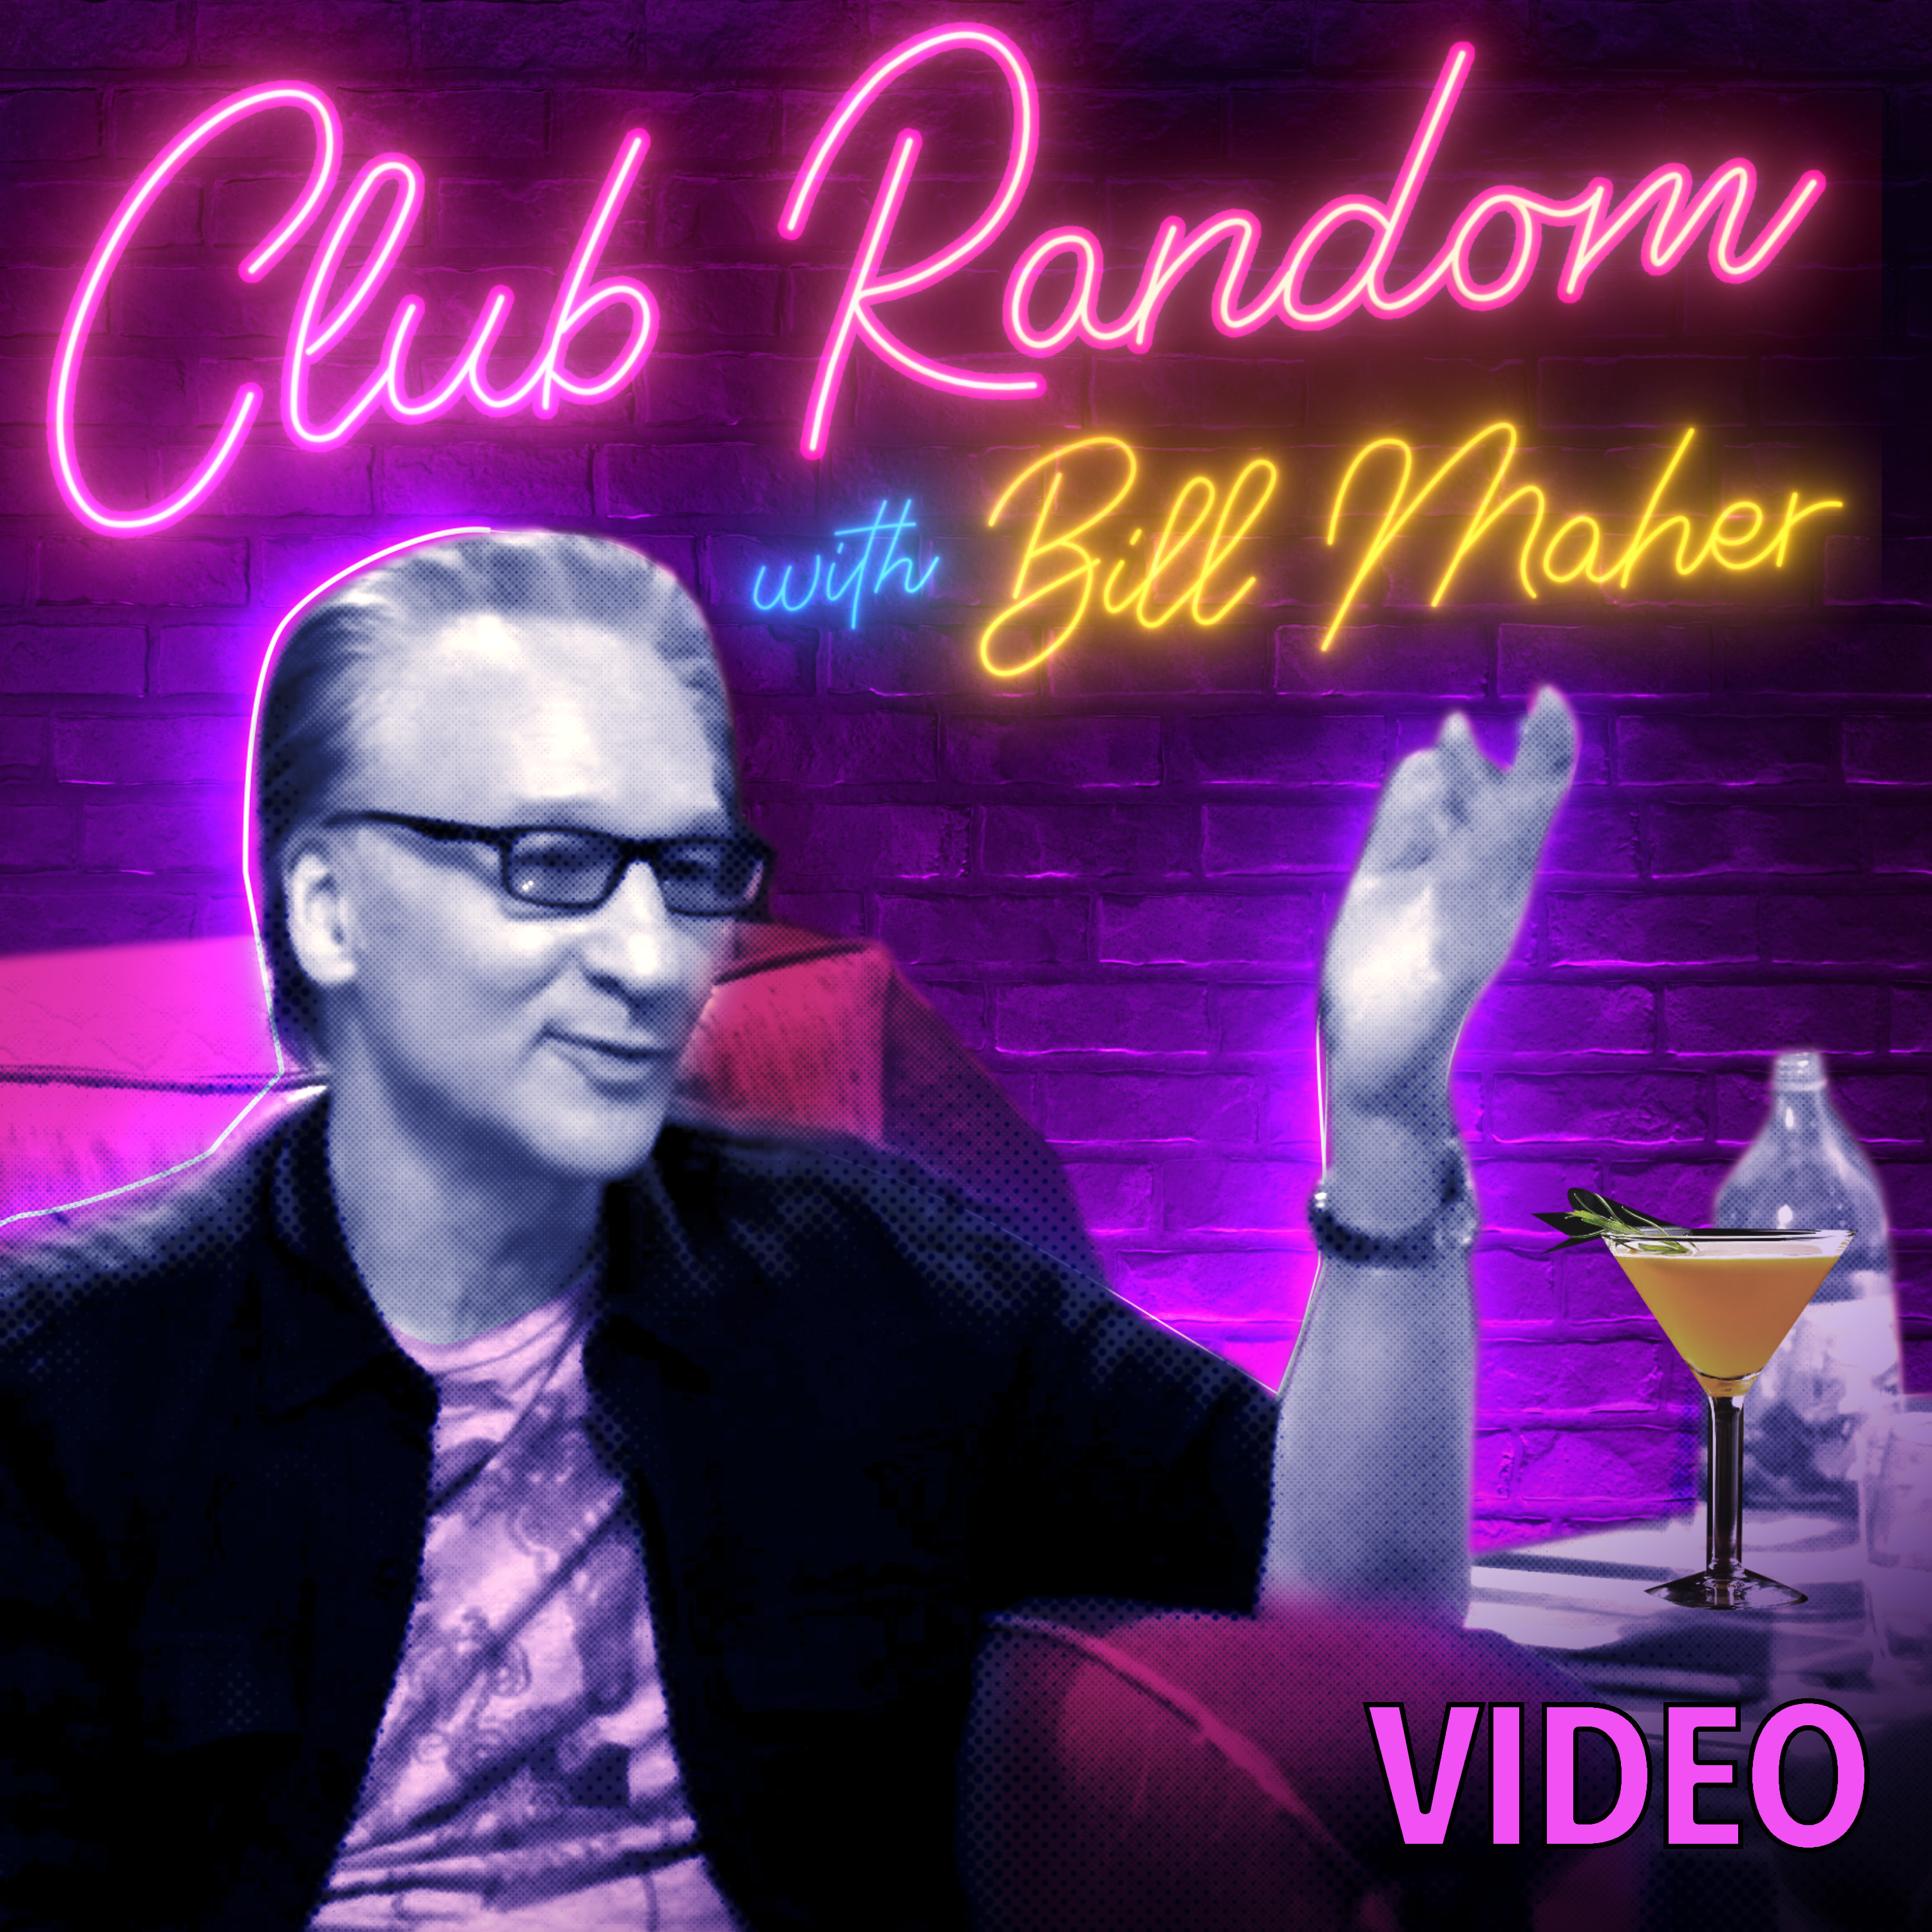 Video: Dr. Phil | Club Random with Bill Maher